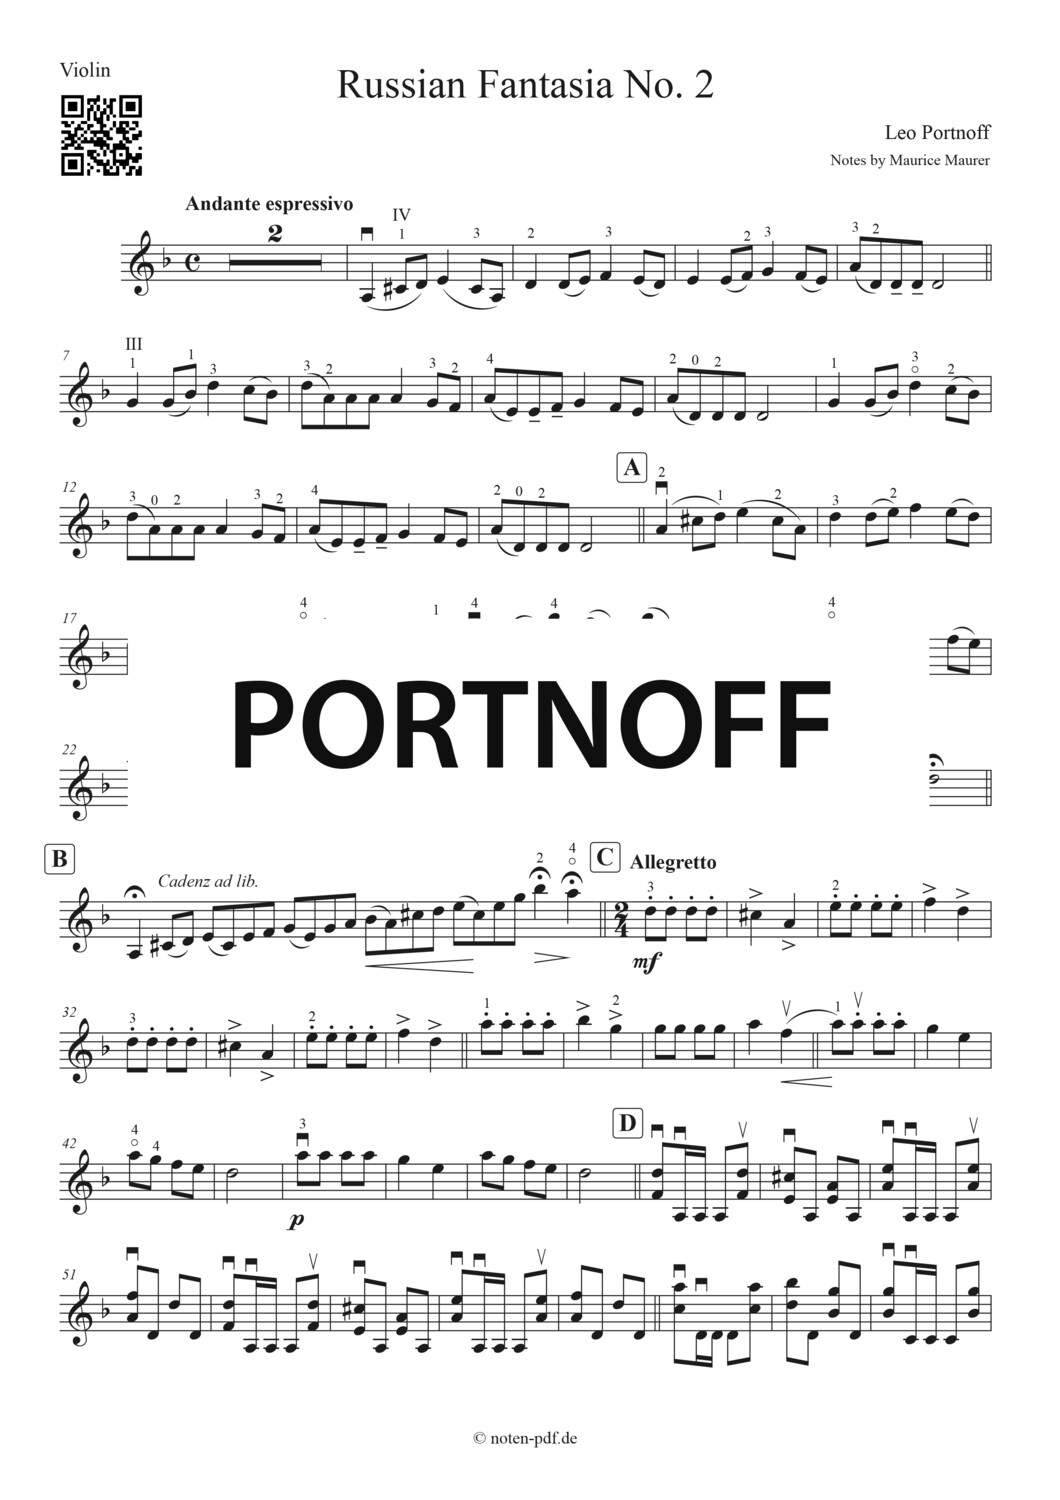 Portnoff: Russian Fantasia - No. 2 + MP3